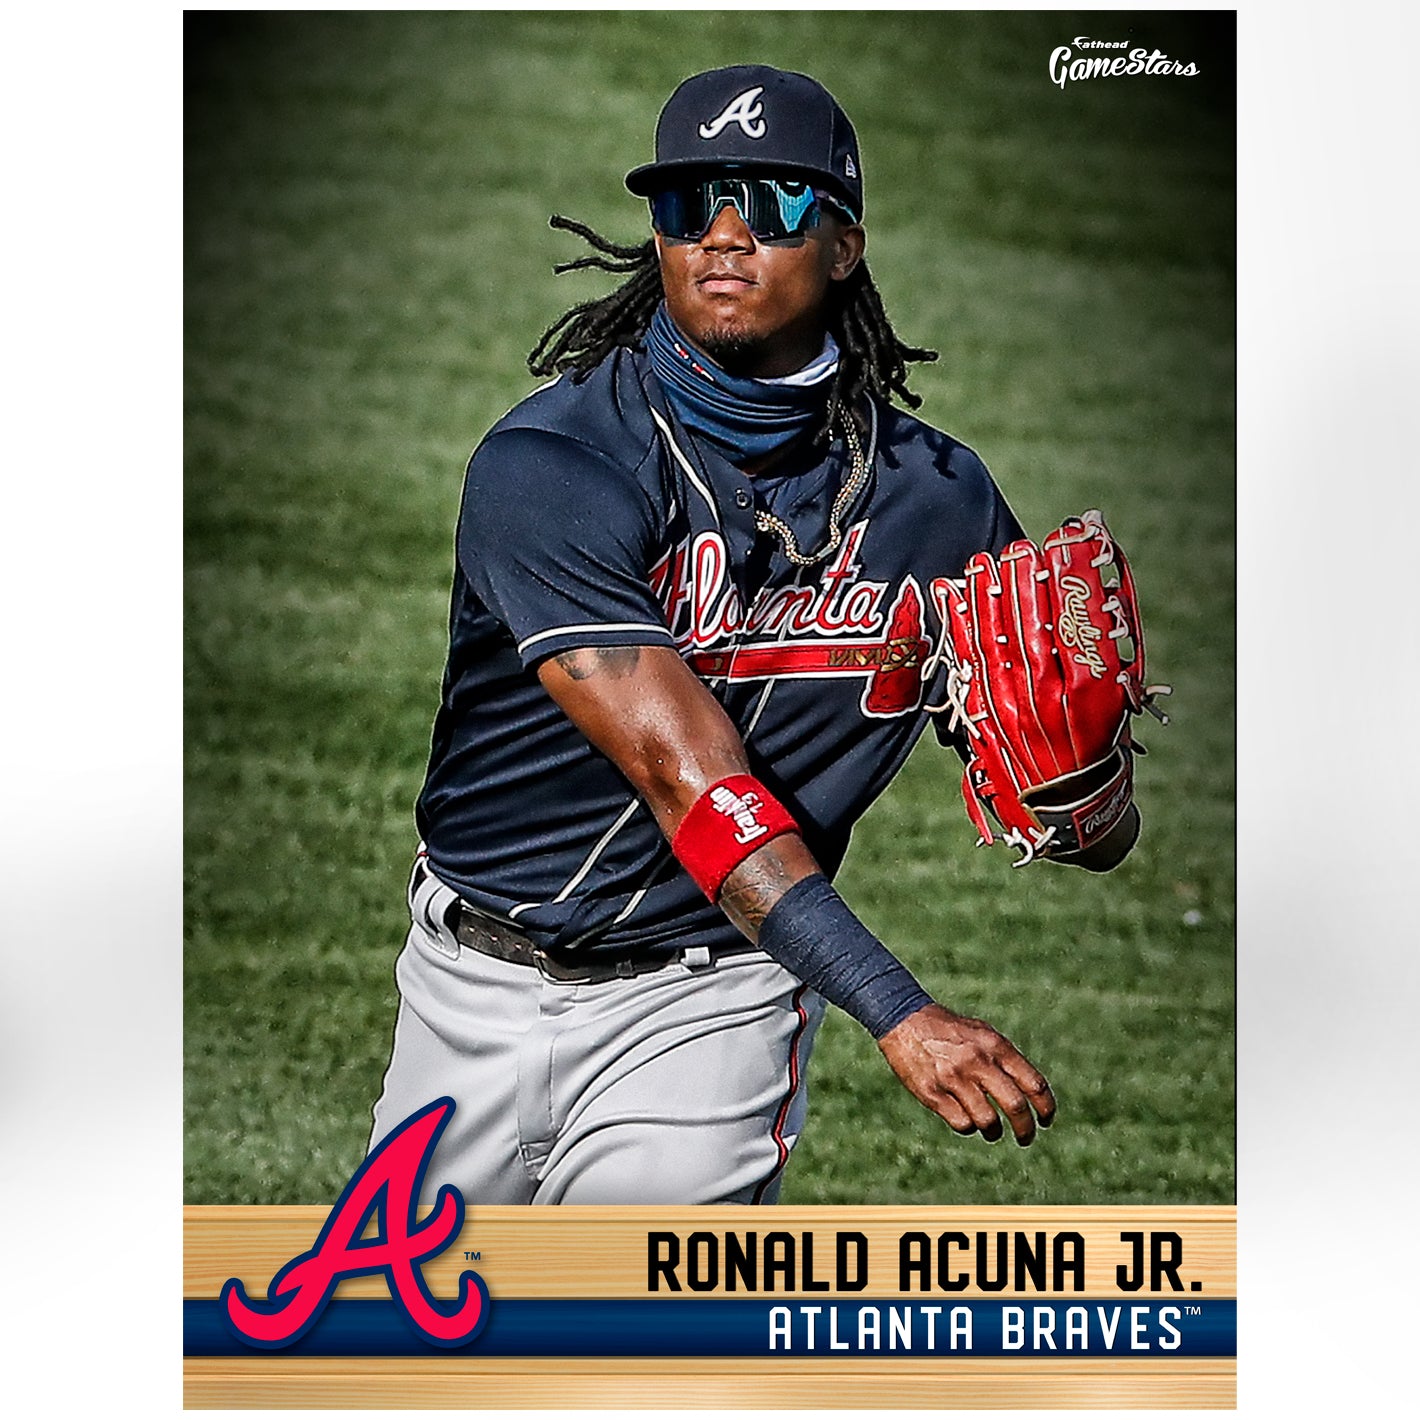 Atlanta Braves: Ronald Acuña Jr. 2021 Mural - Officially Licensed